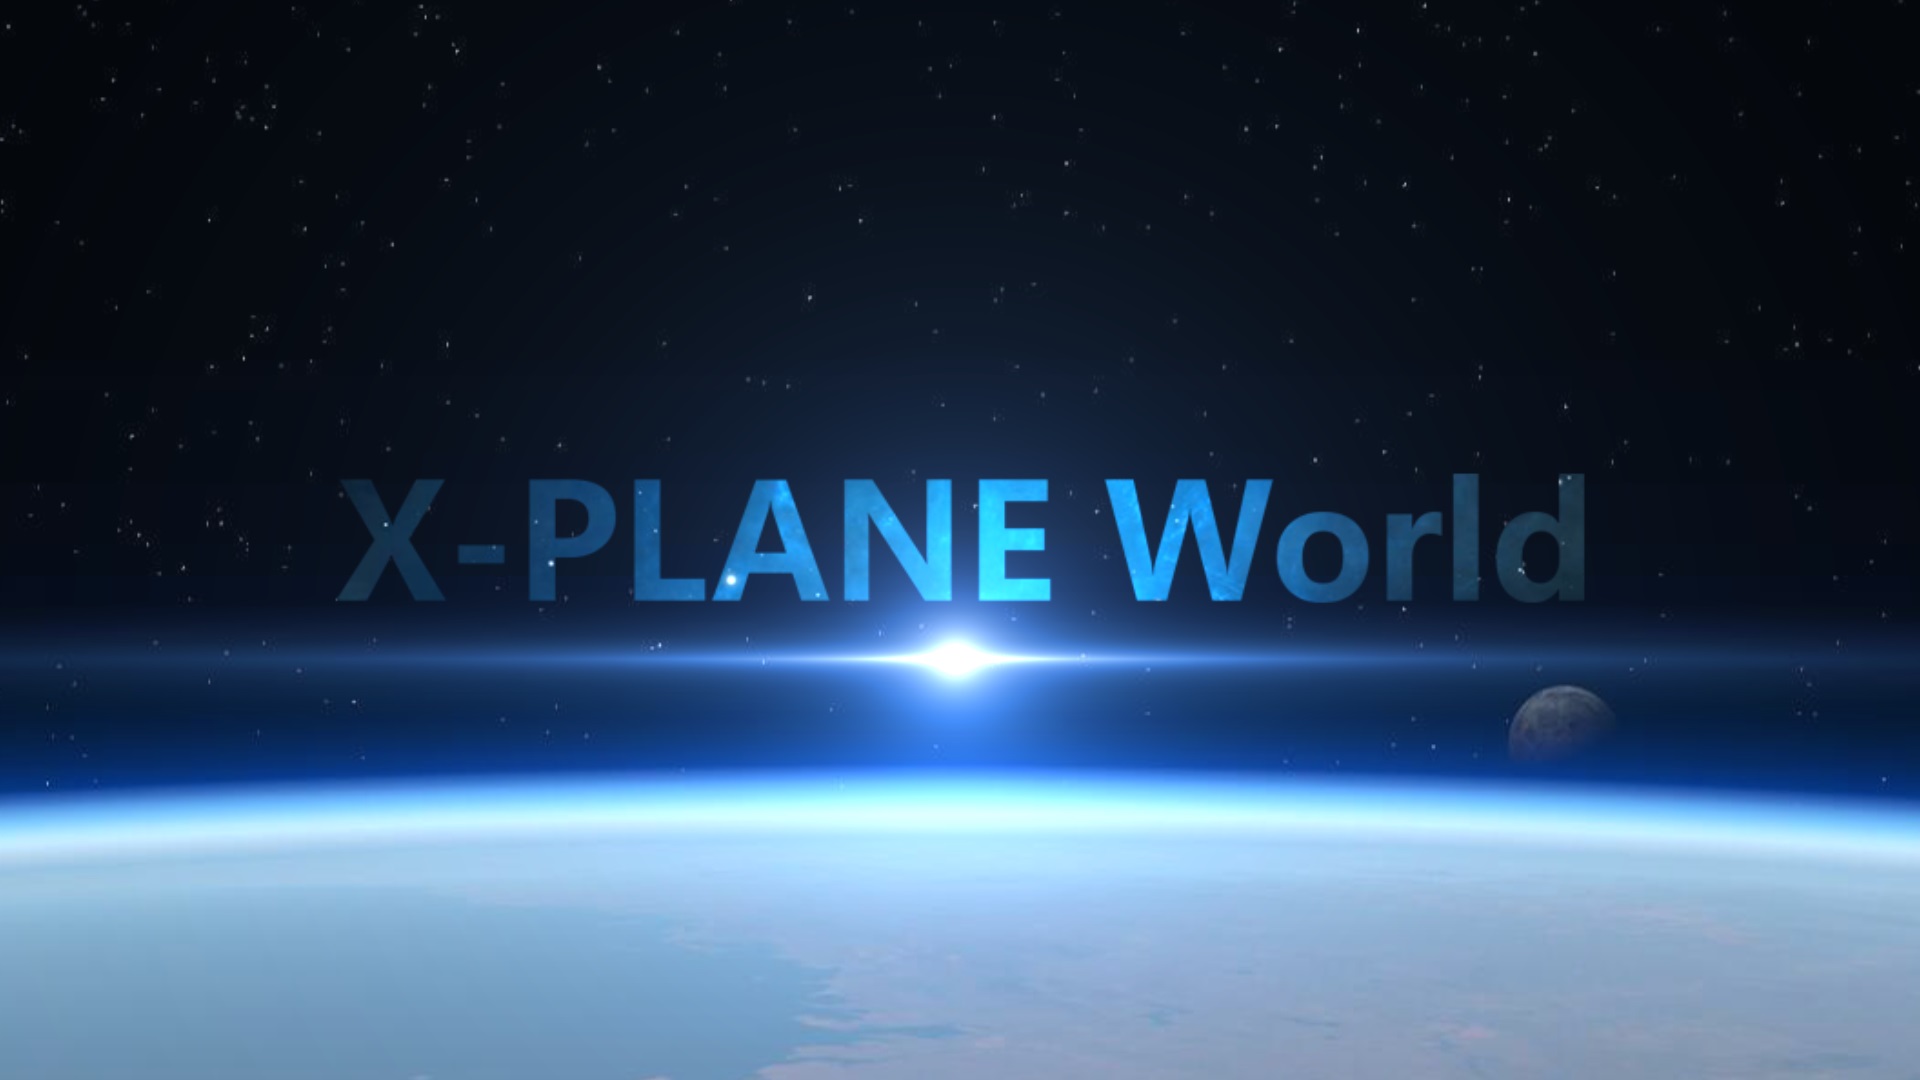 X-PLANE FILM - XP World-6640 